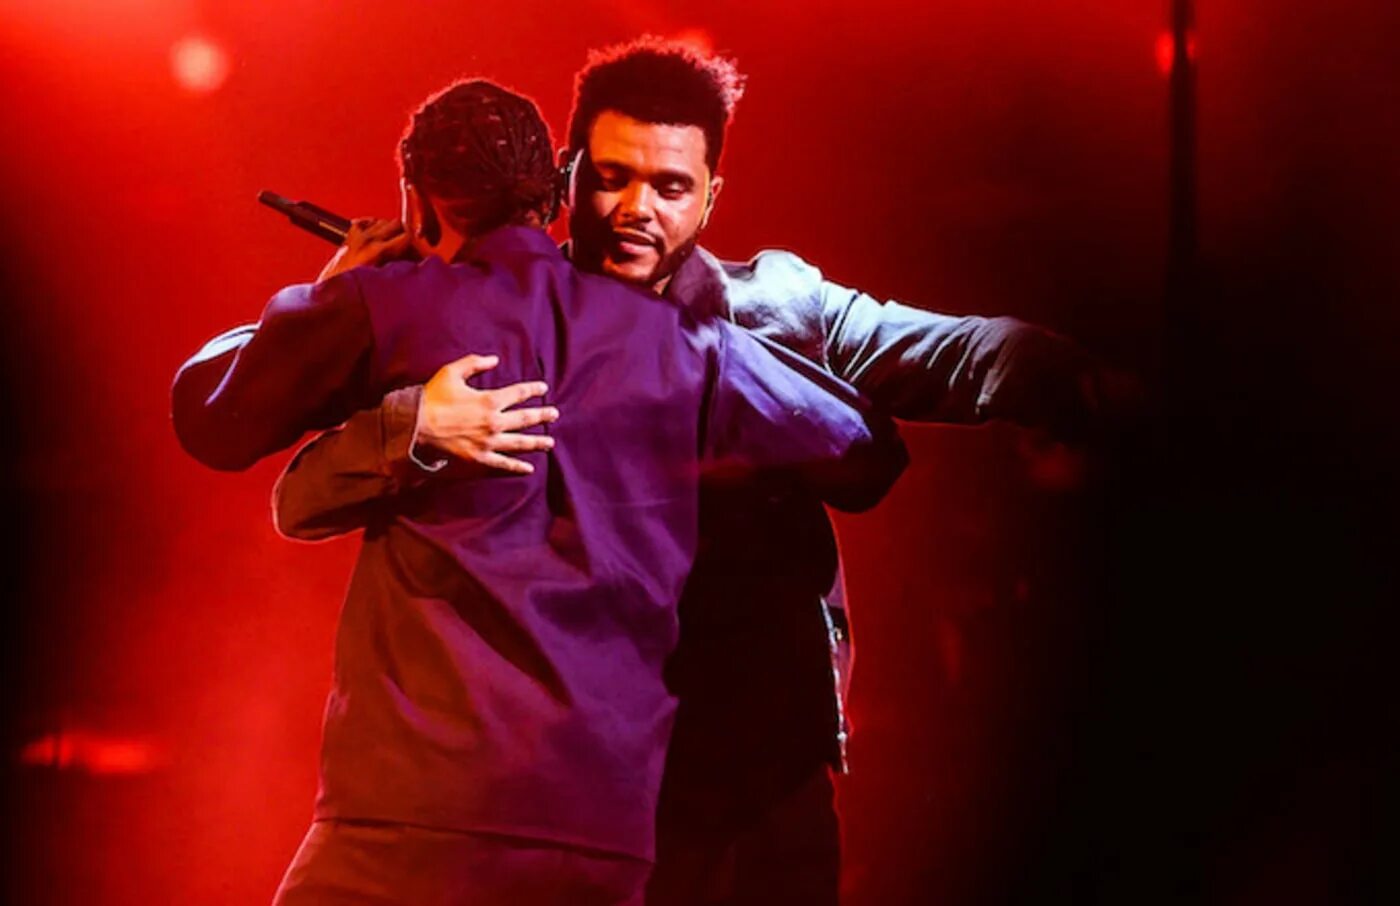 The Weeknd Kendrick Lamar. Starboy: Legend of the Fall Tour. The Weeknd, Kendrick Lamar - Pray for me. Концерт the Weeknd. Pray for me the weeknd